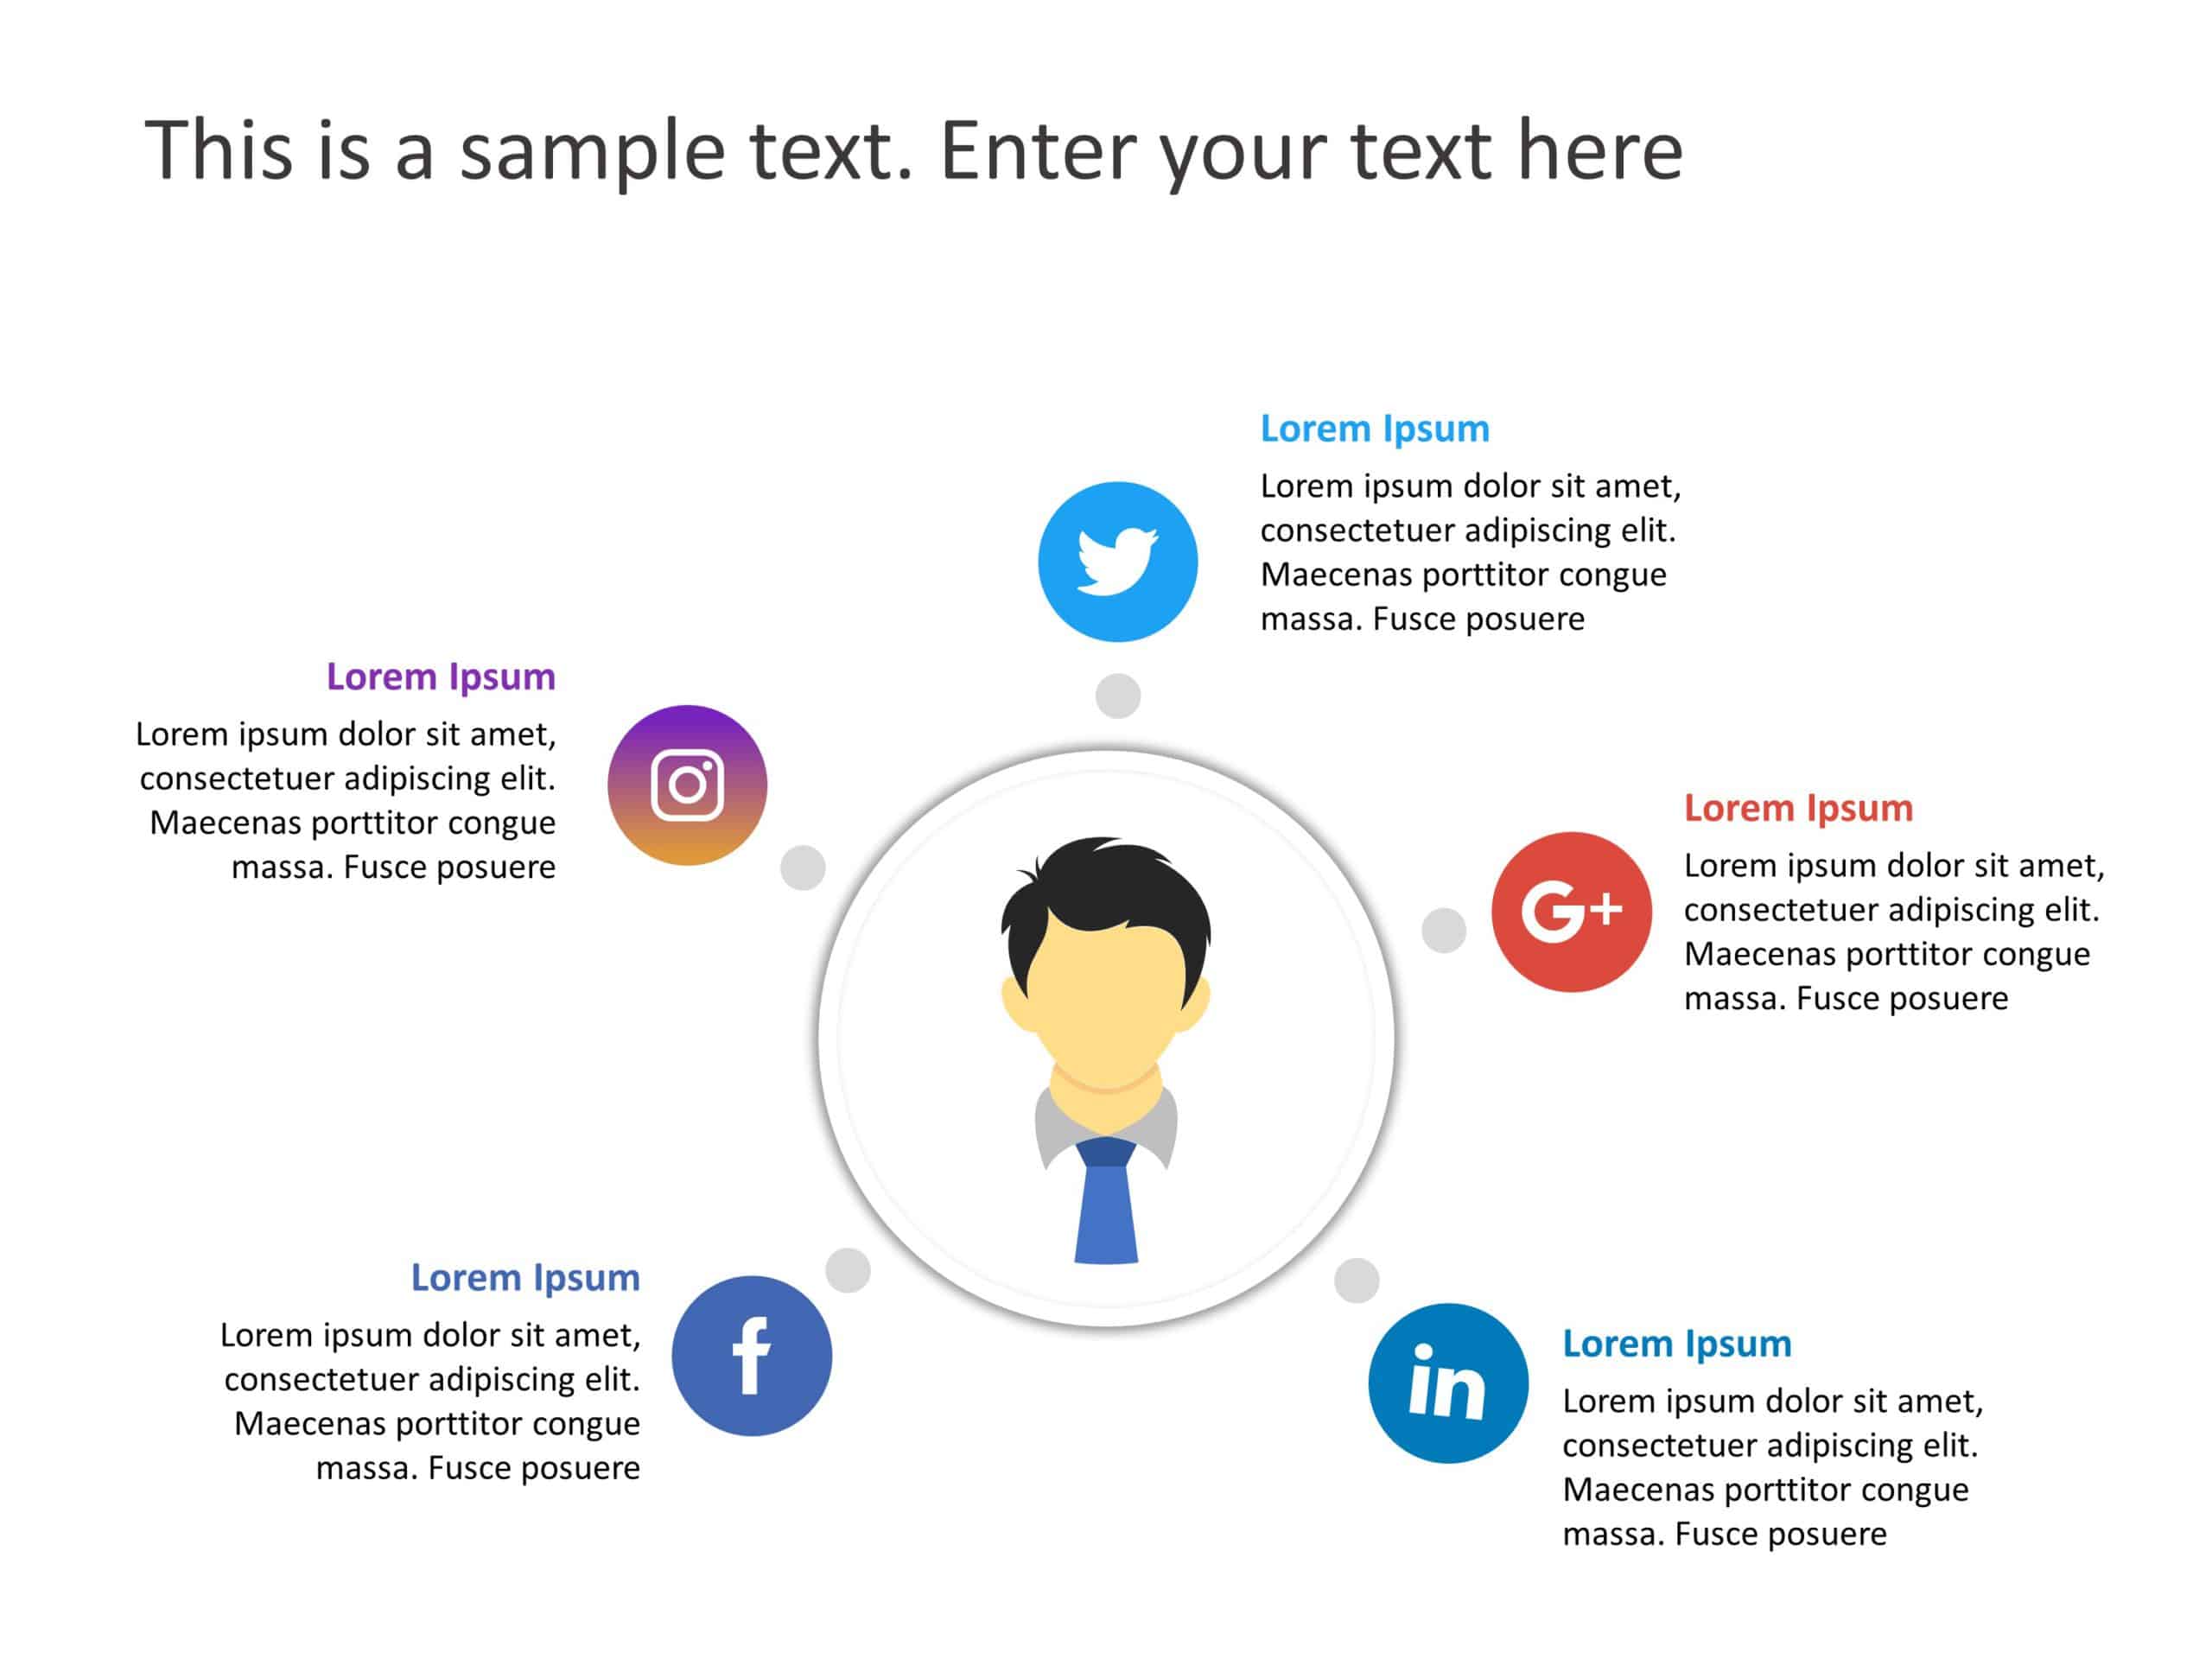 Social Media Marketing 9 PowerPoint Template & Google Slides Theme